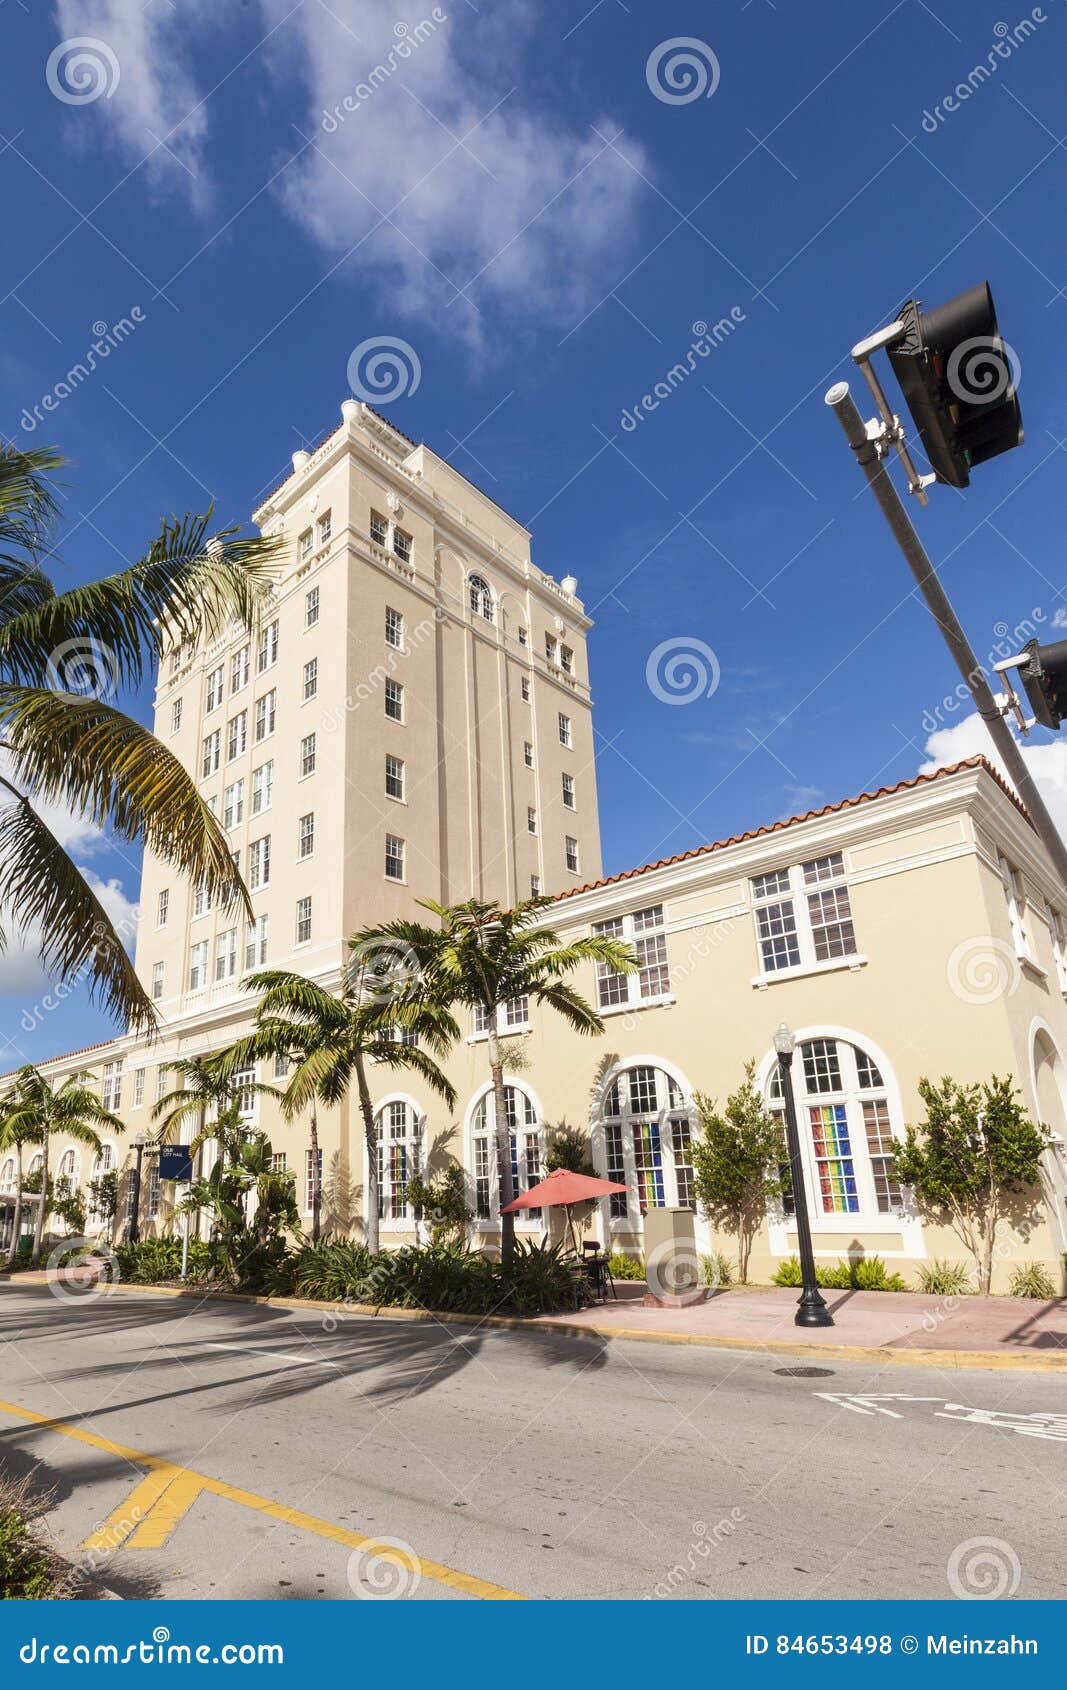 Vintage Miami Beach City Hall in Art Deco Style Stock Photo - Image of ...